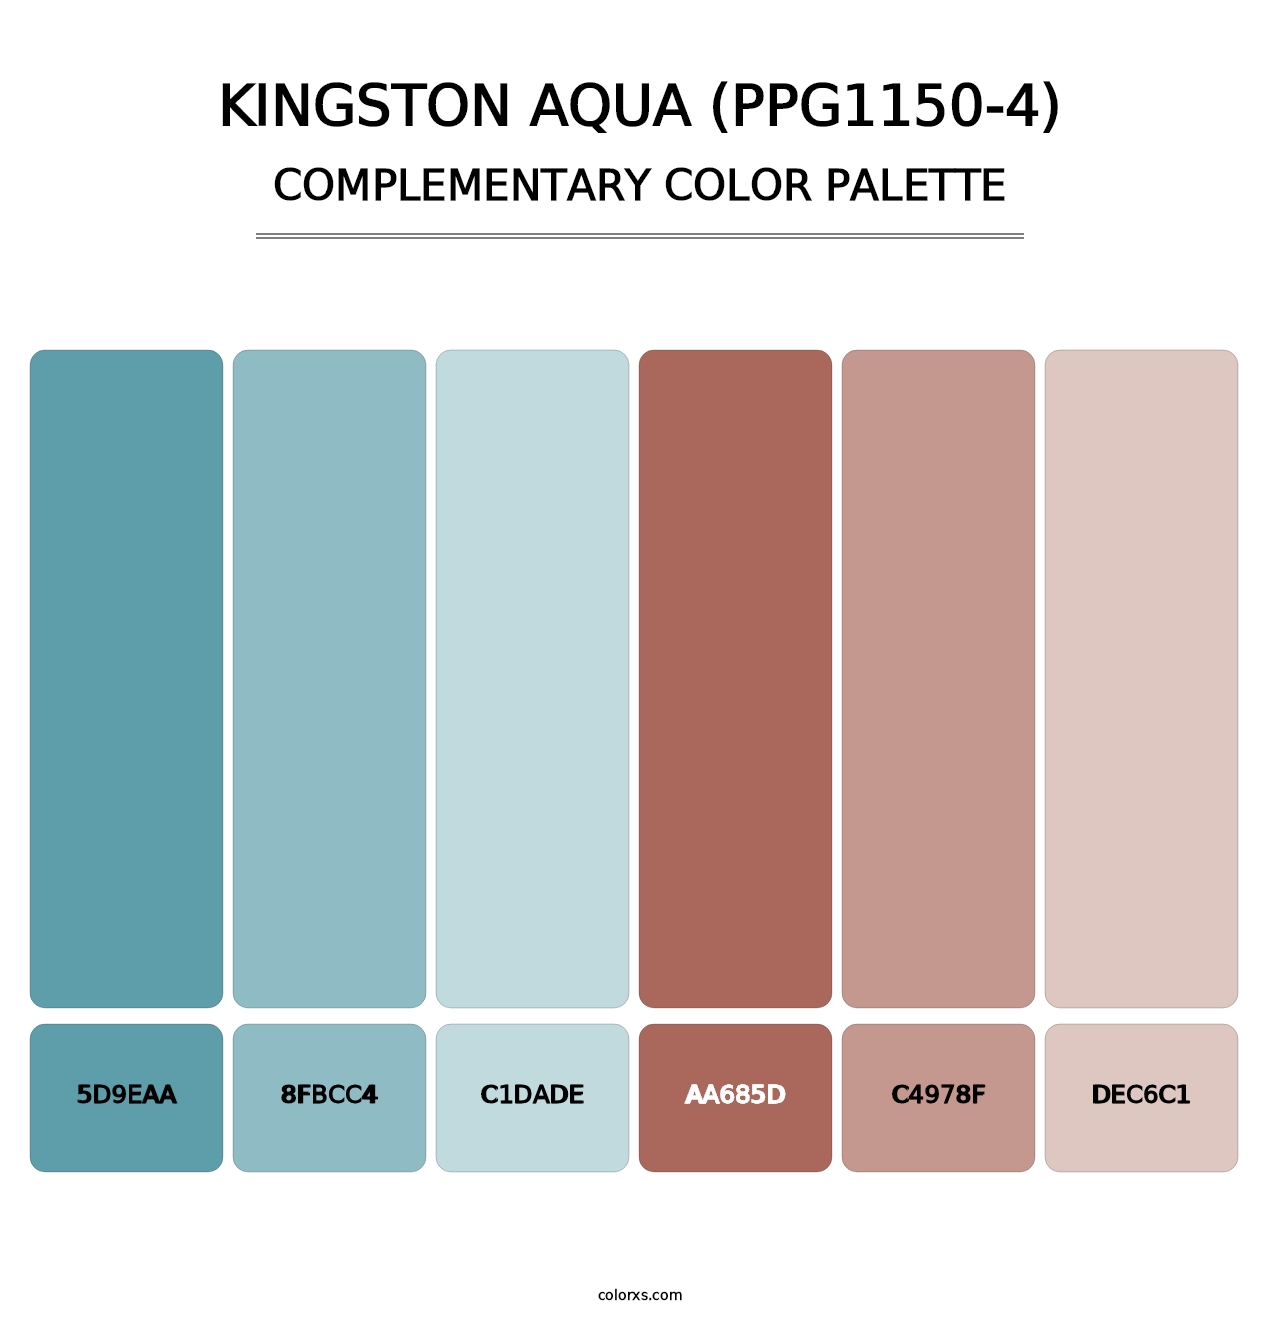 Kingston Aqua (PPG1150-4) - Complementary Color Palette